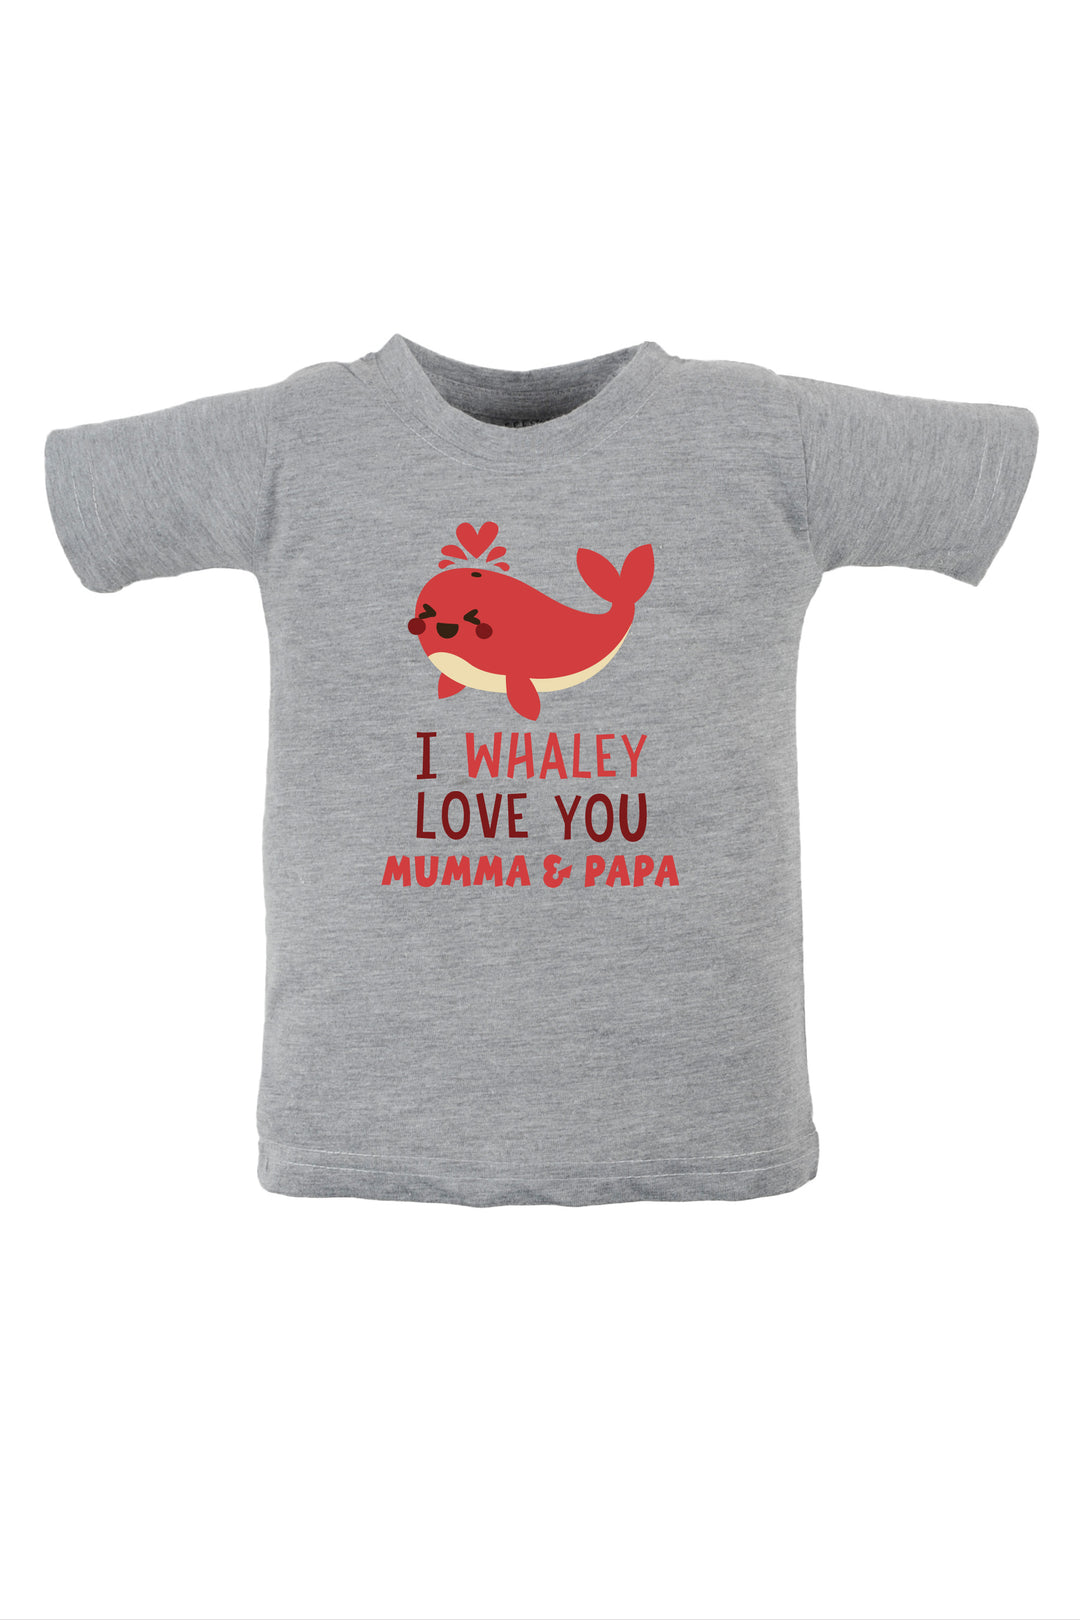 I Whaley Love You Mumma & Papa Kids T Shirt